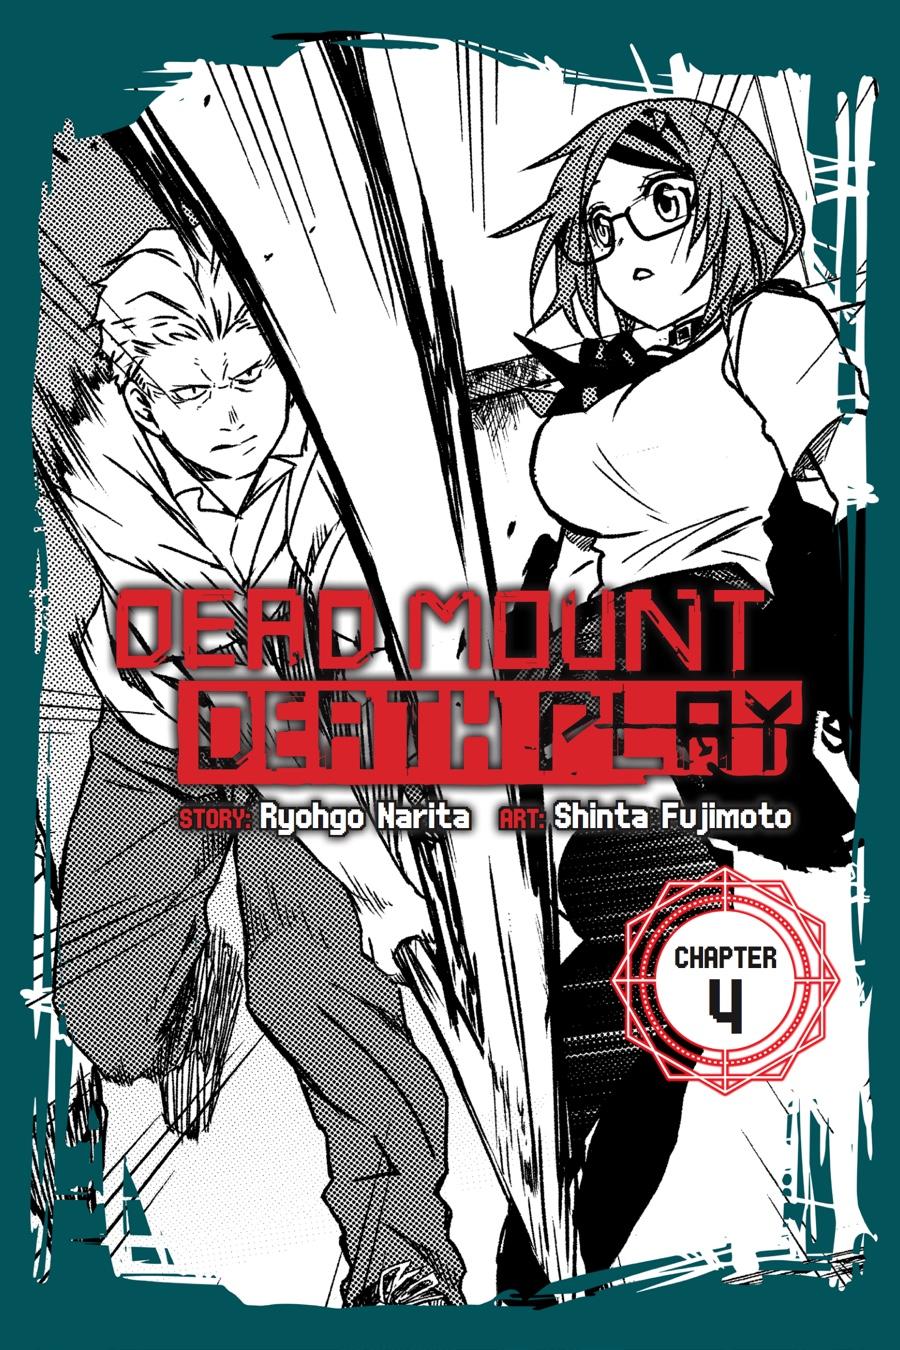 Dead Mount Death Play Capítulo 92 - Manga Online